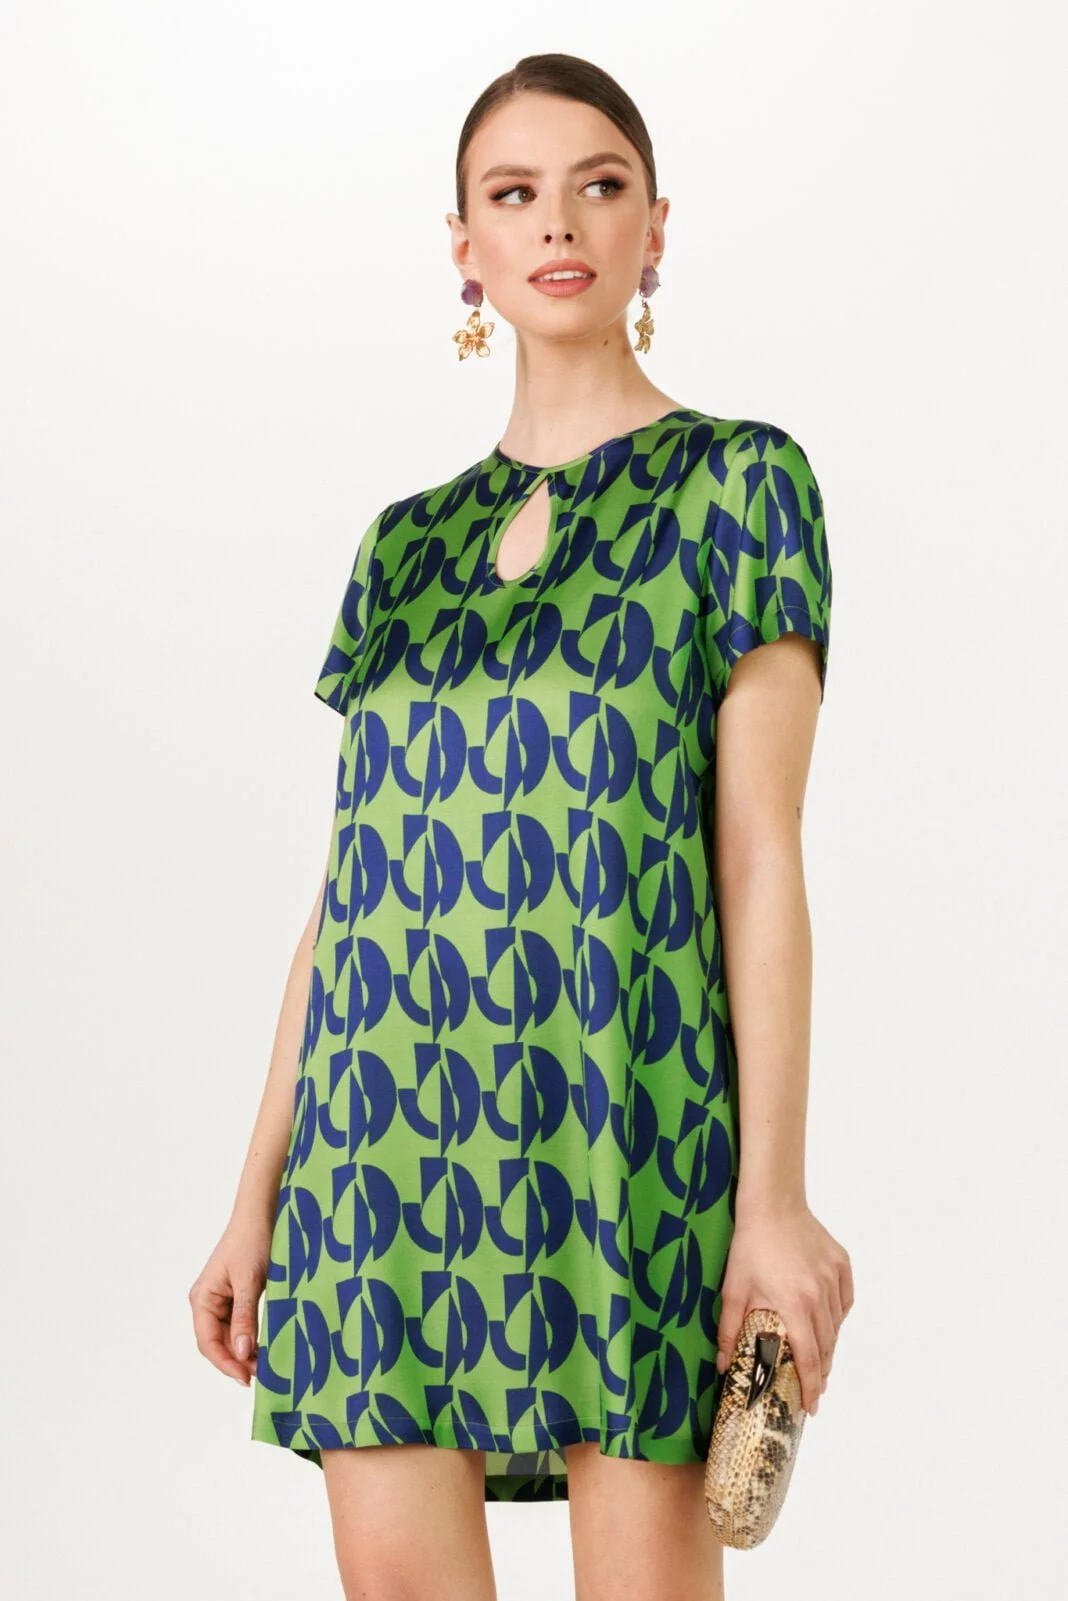 Green Navy Geometric Print Mini Dress - Luxurious Party Cocktail Summer Style, Keyhole Neckline"